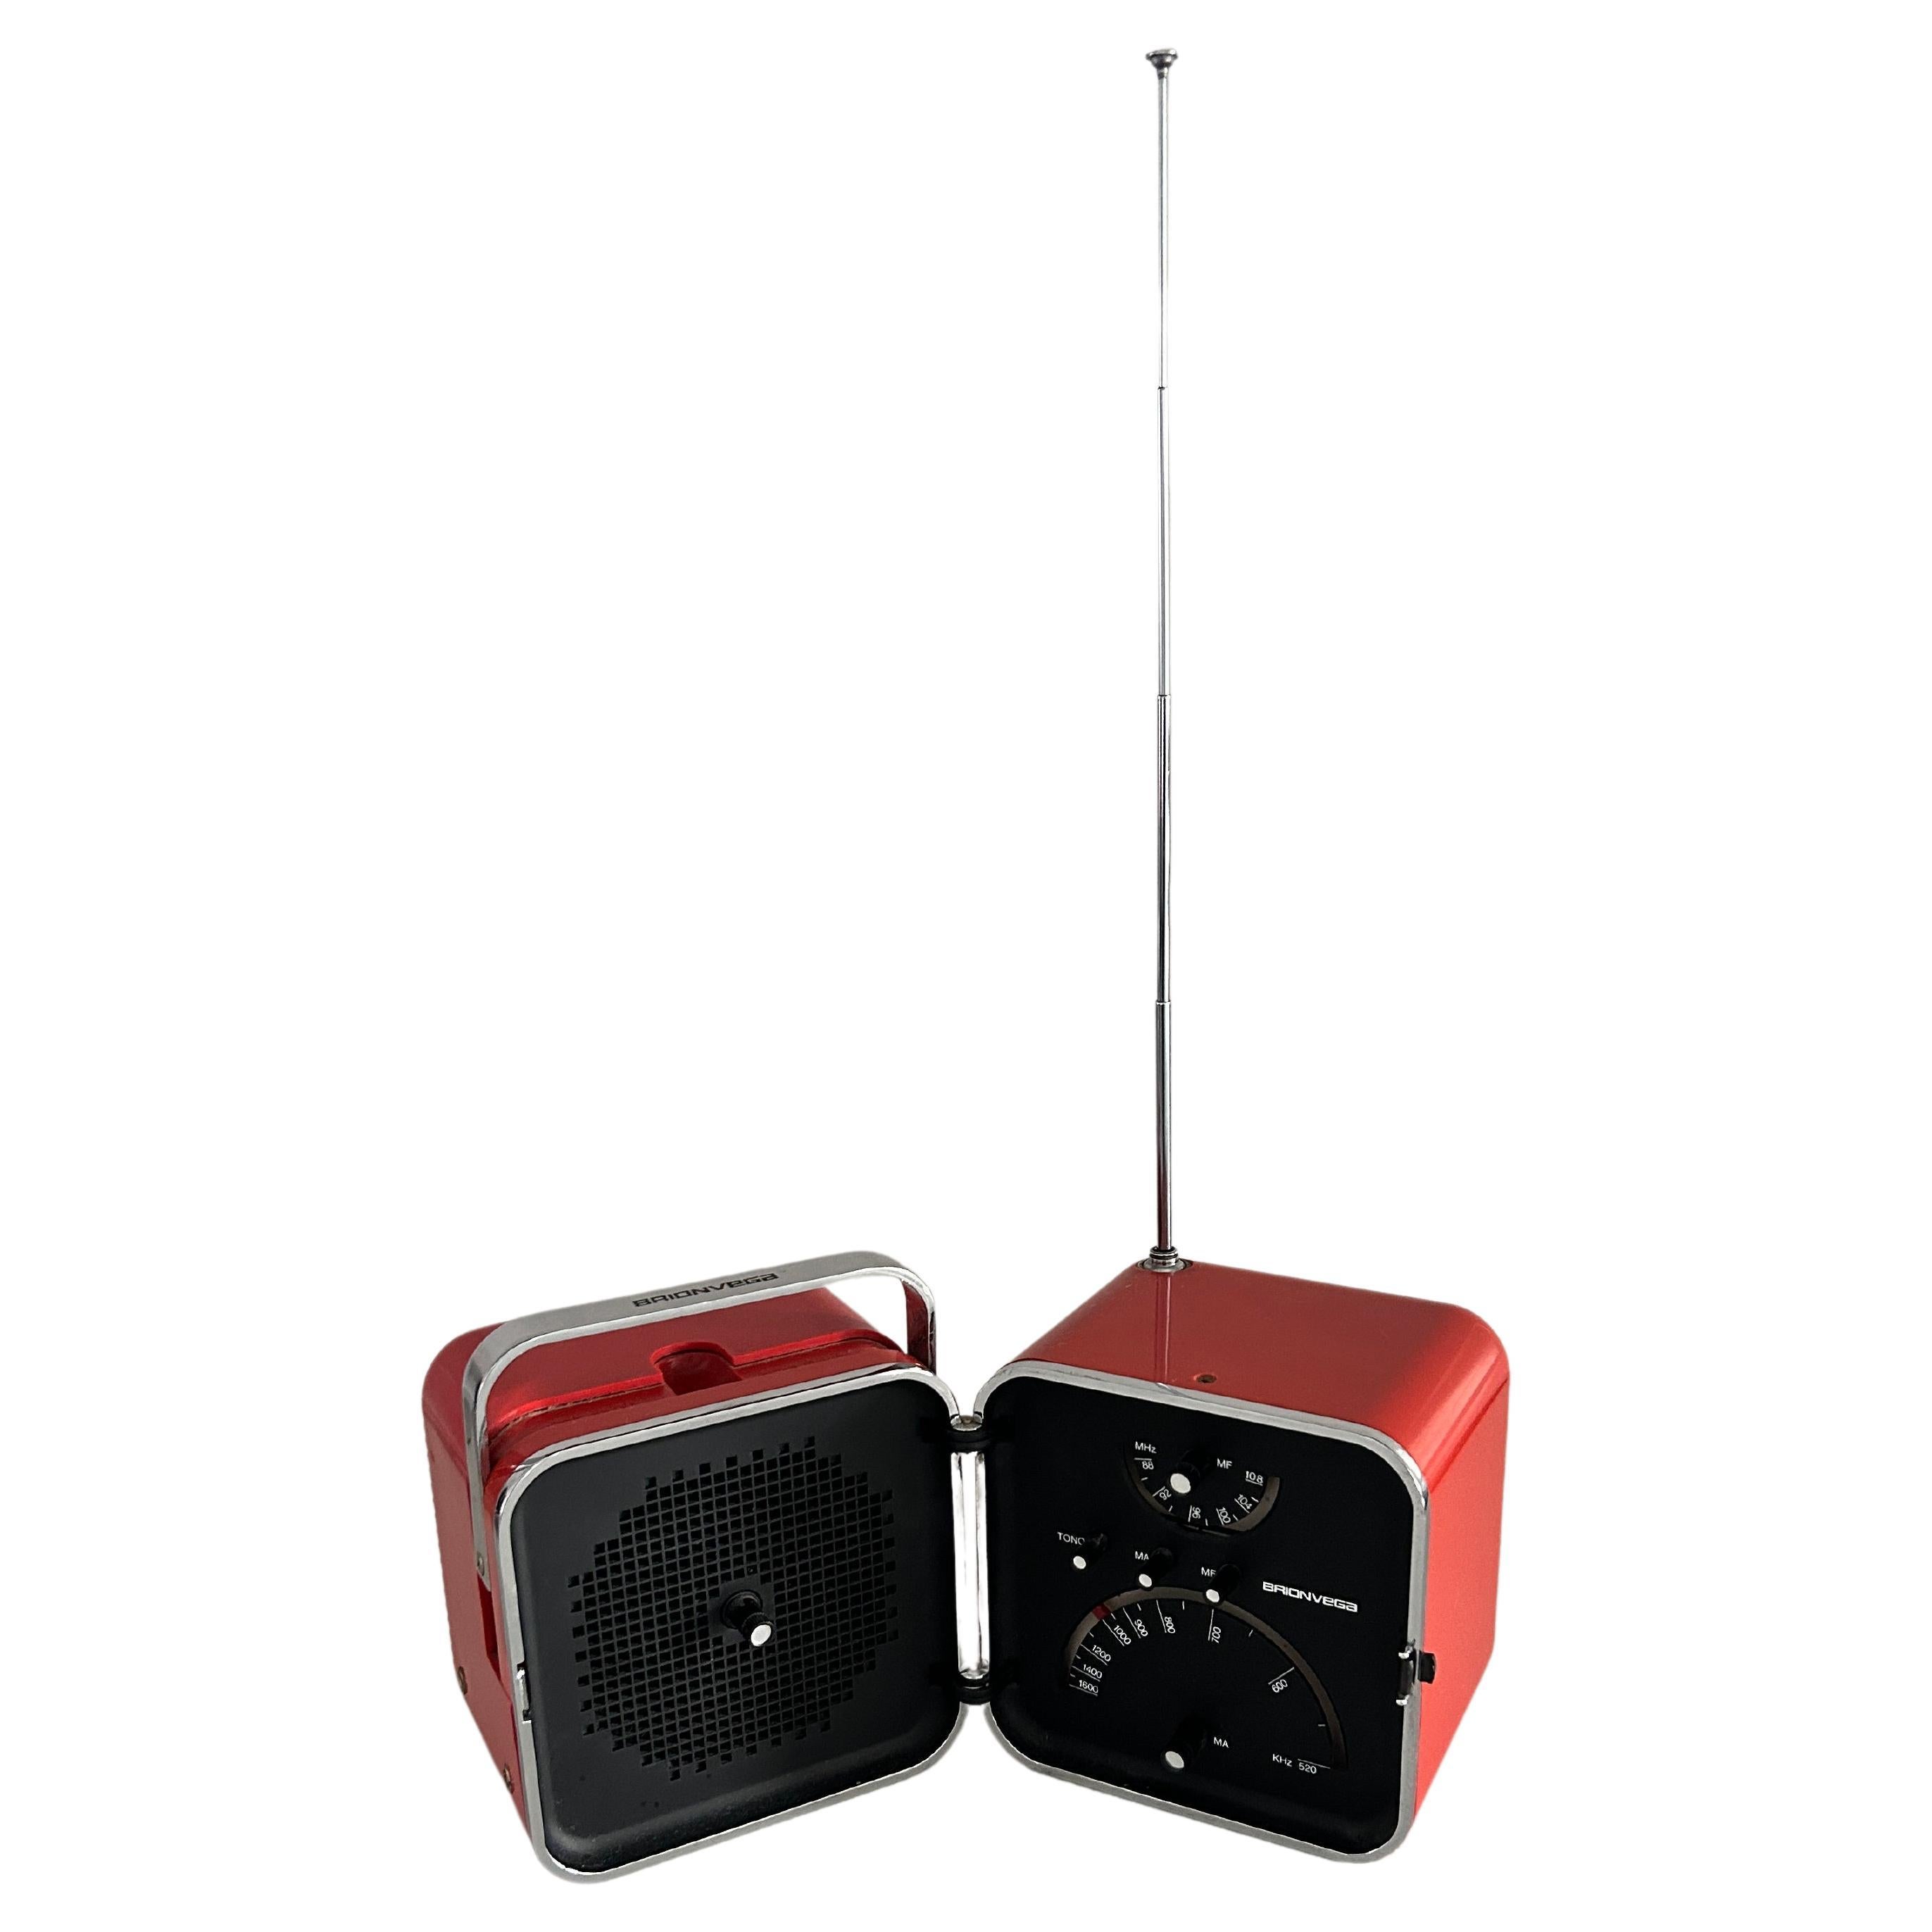 Radio Cube Brionvega mod. TS502, Richard Sapper und Marco Zanuso